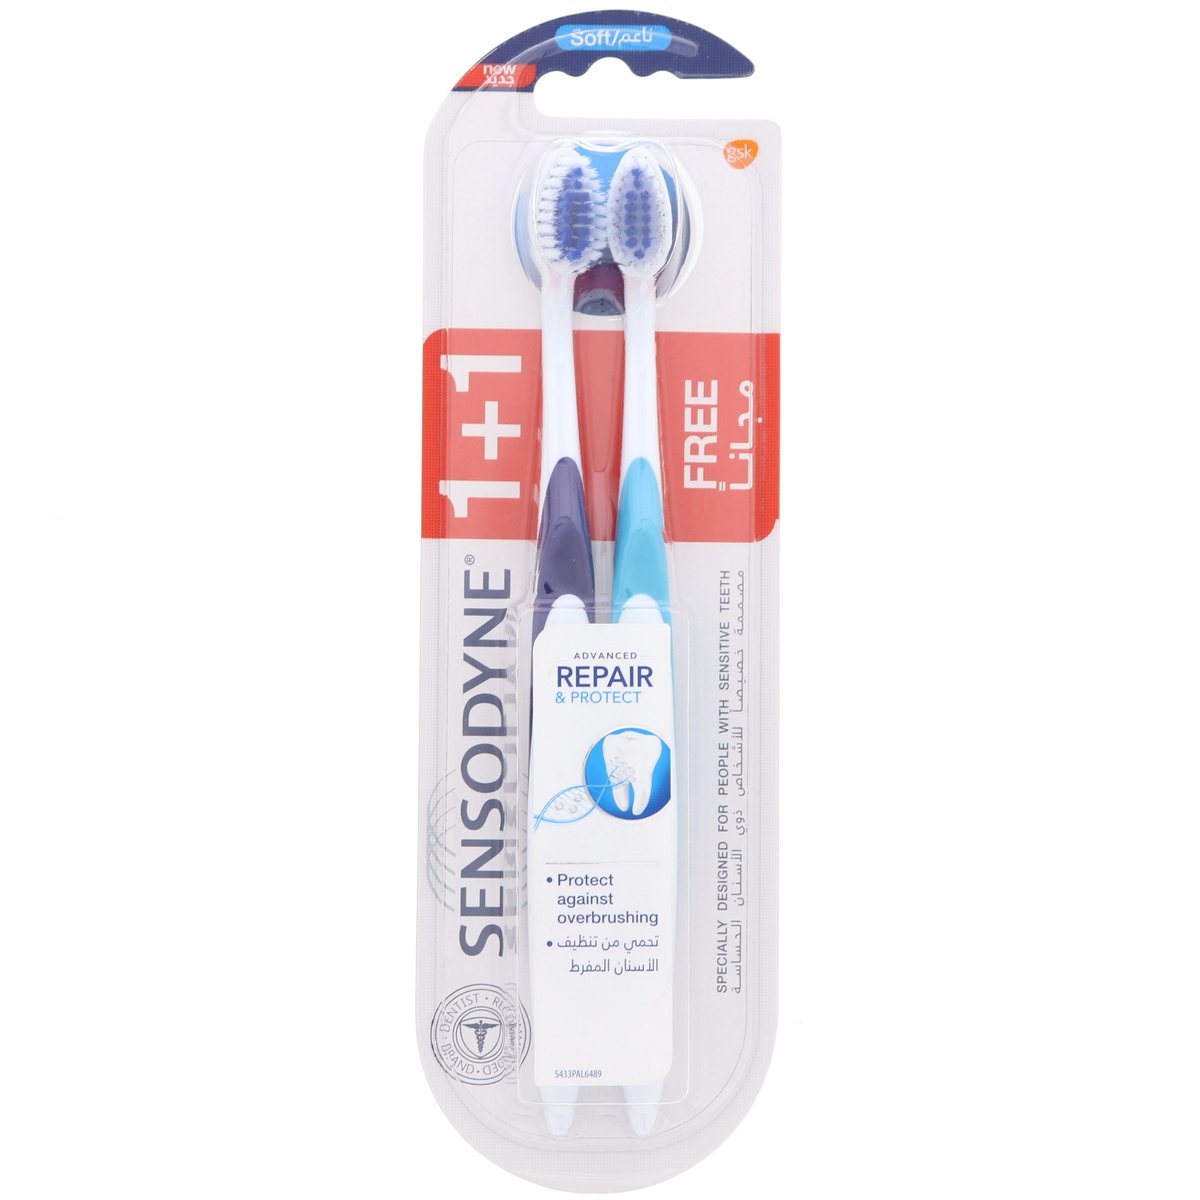 Sensodyne Advanced Repair & Protect  Soft Toothbrush 2pcs Assorted Color